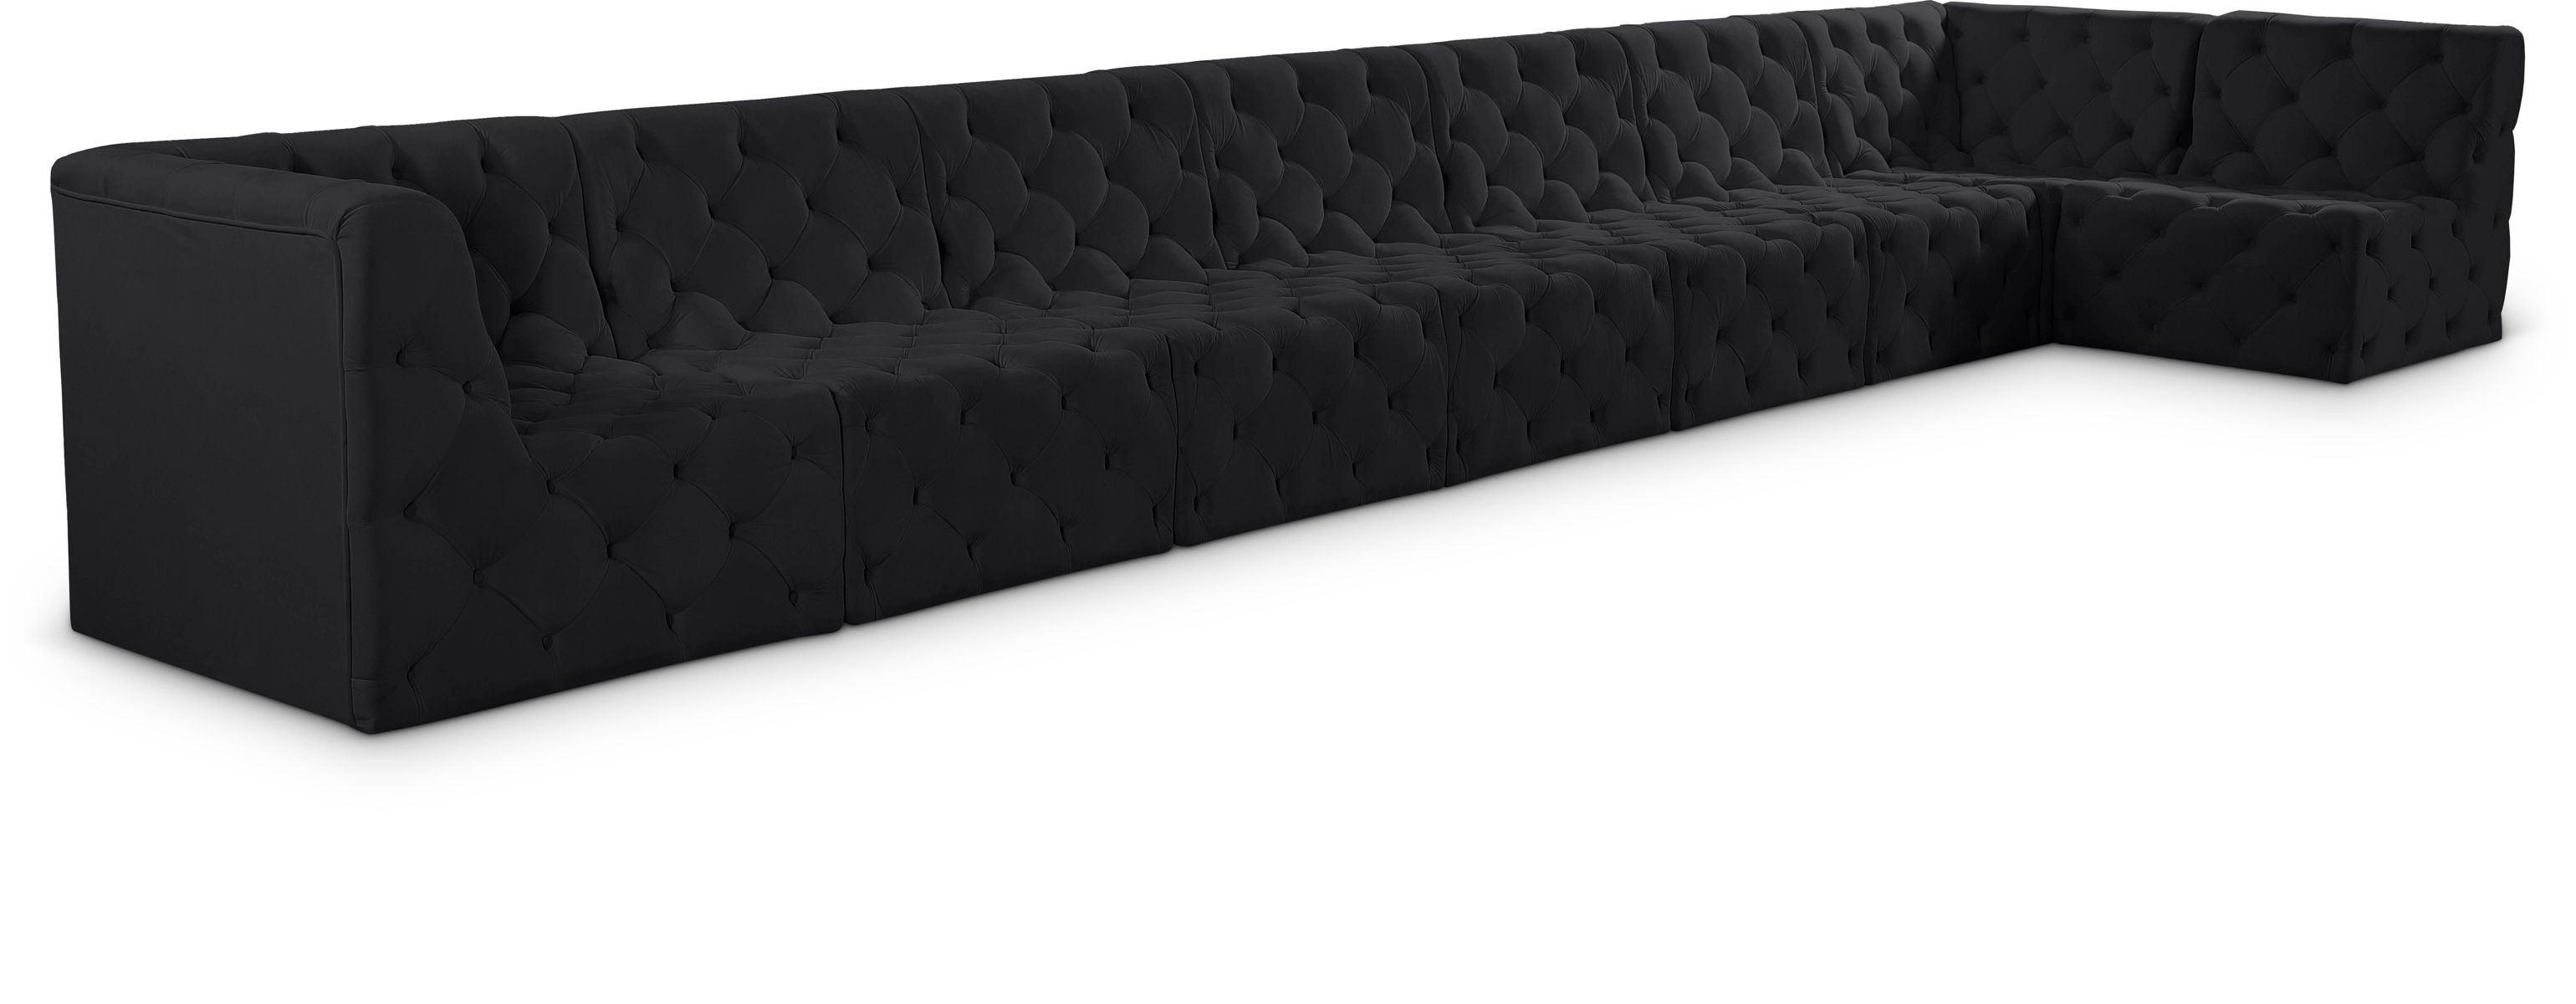 Meridian Furniture - Tuft - Modular Sectional 8 Piece - Black - 5th Avenue Furniture